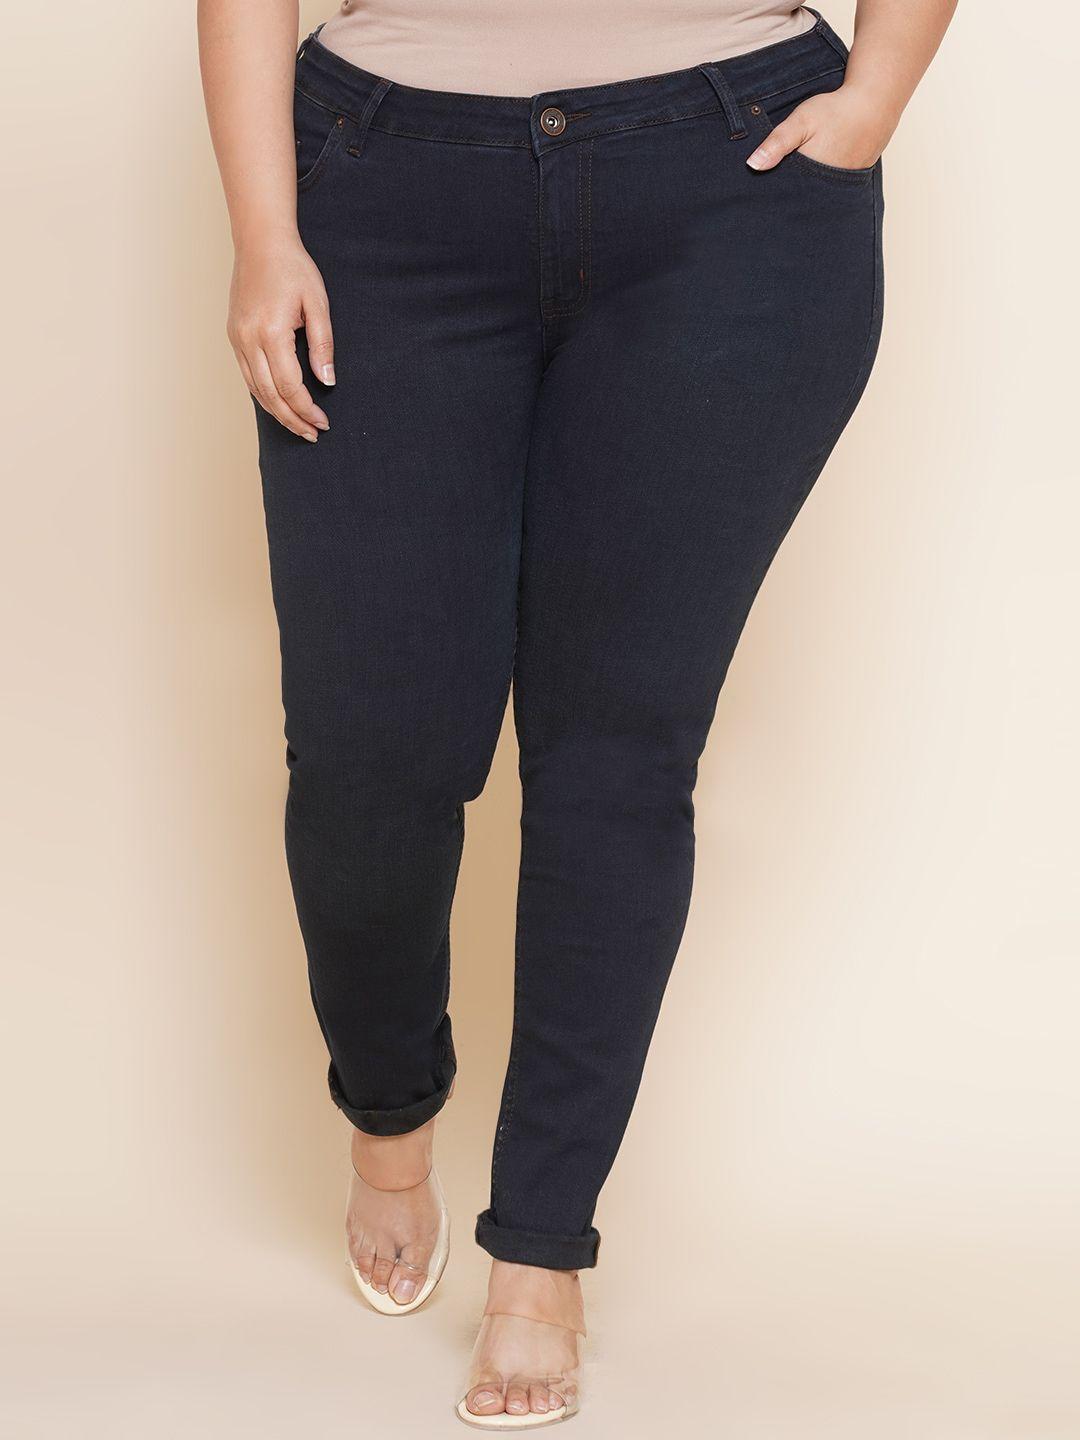 kiaahvi by john pride women plus size mid-rise stretchable jeans